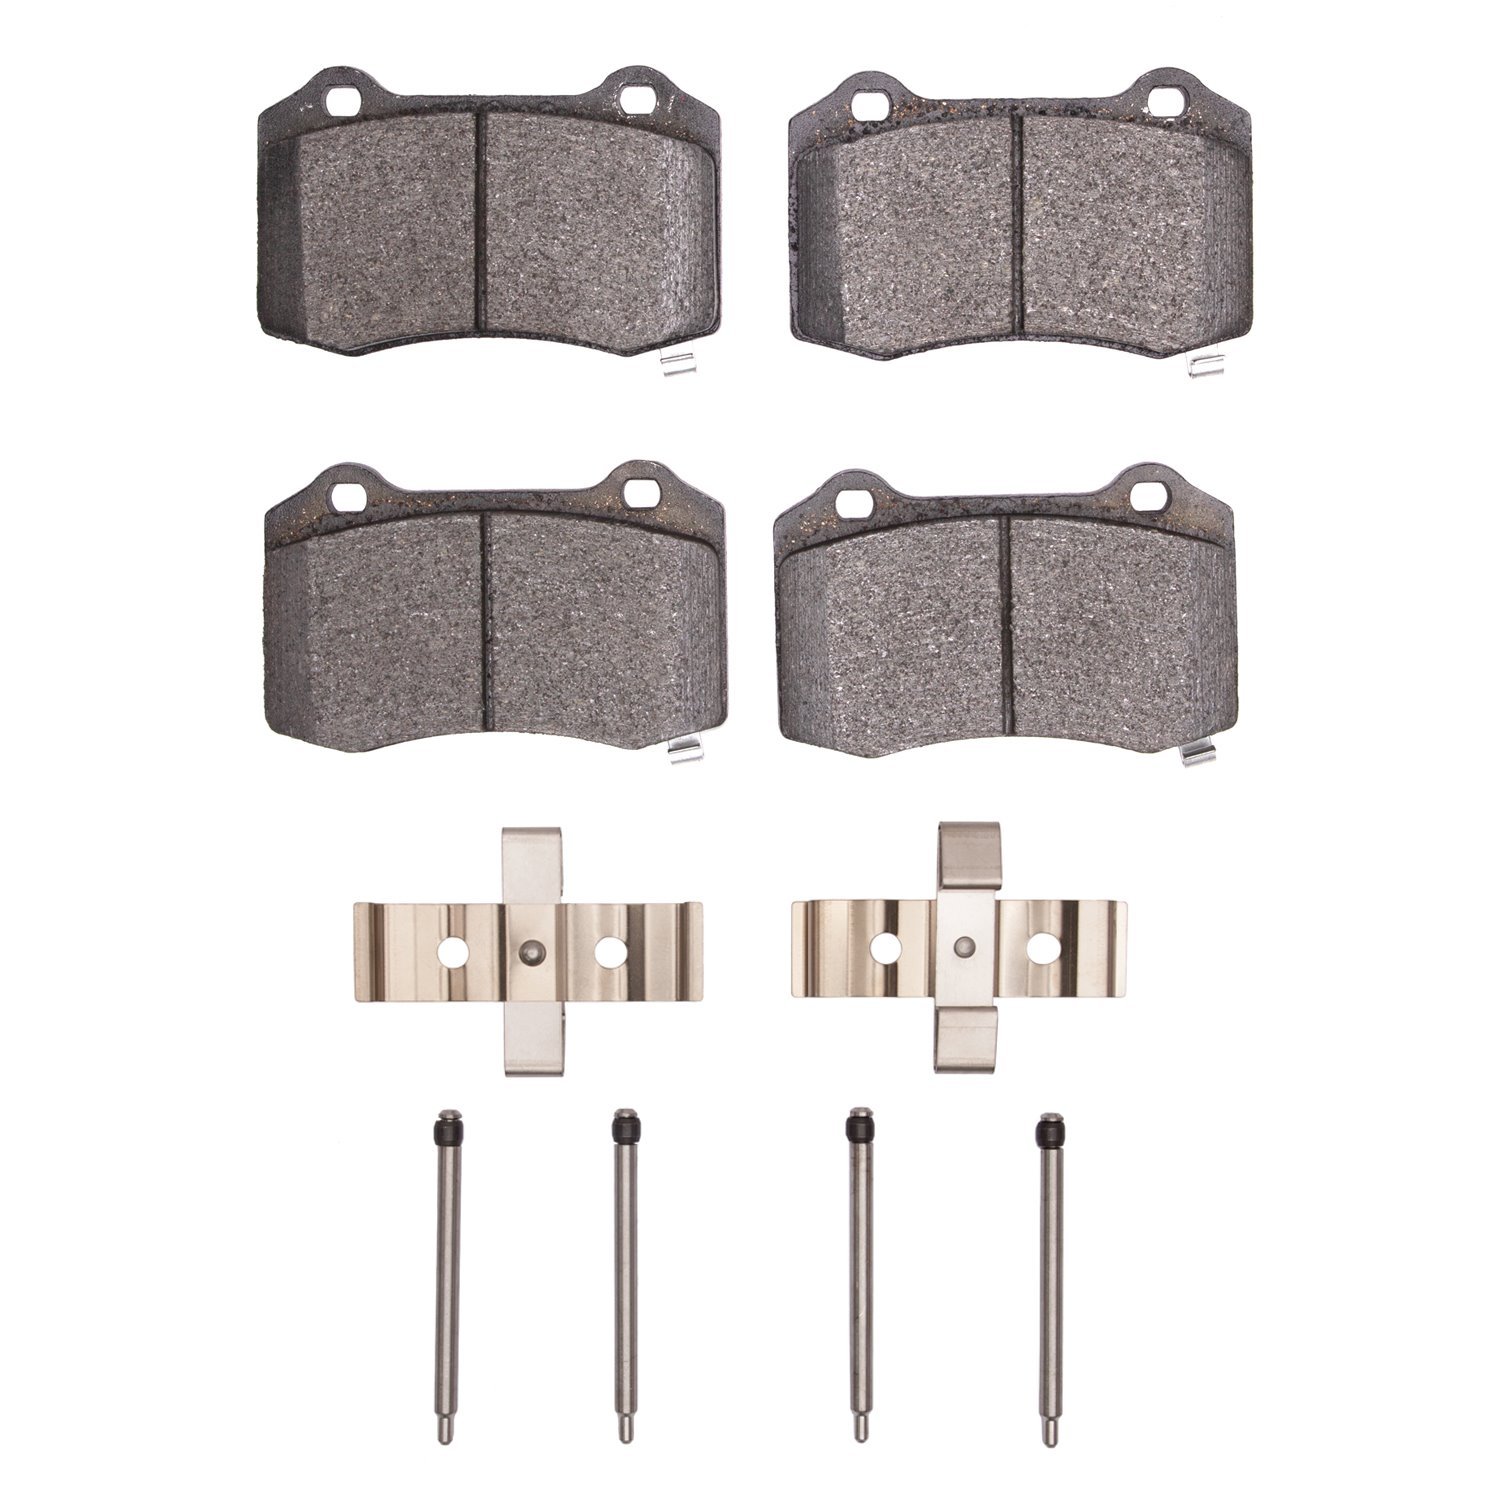 1400-1053-01 Ultimate-Duty Brake Pads & Hardware Kit, Fits Select Multiple Makes/Models, Position: Rear